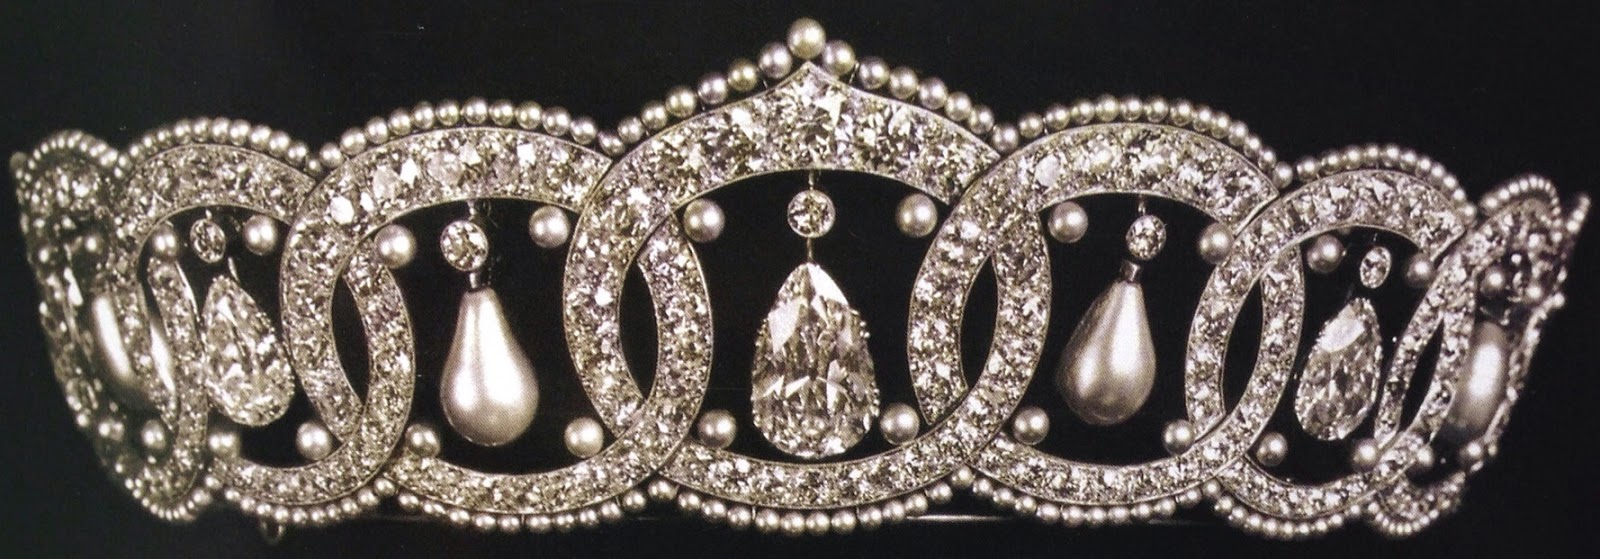 تيجان ملكية  امبراطورية فاخرة رعة Pearl+&+Diamond+Tiara+(1913)+by+Cartier+for+Princess+Anastasia+1